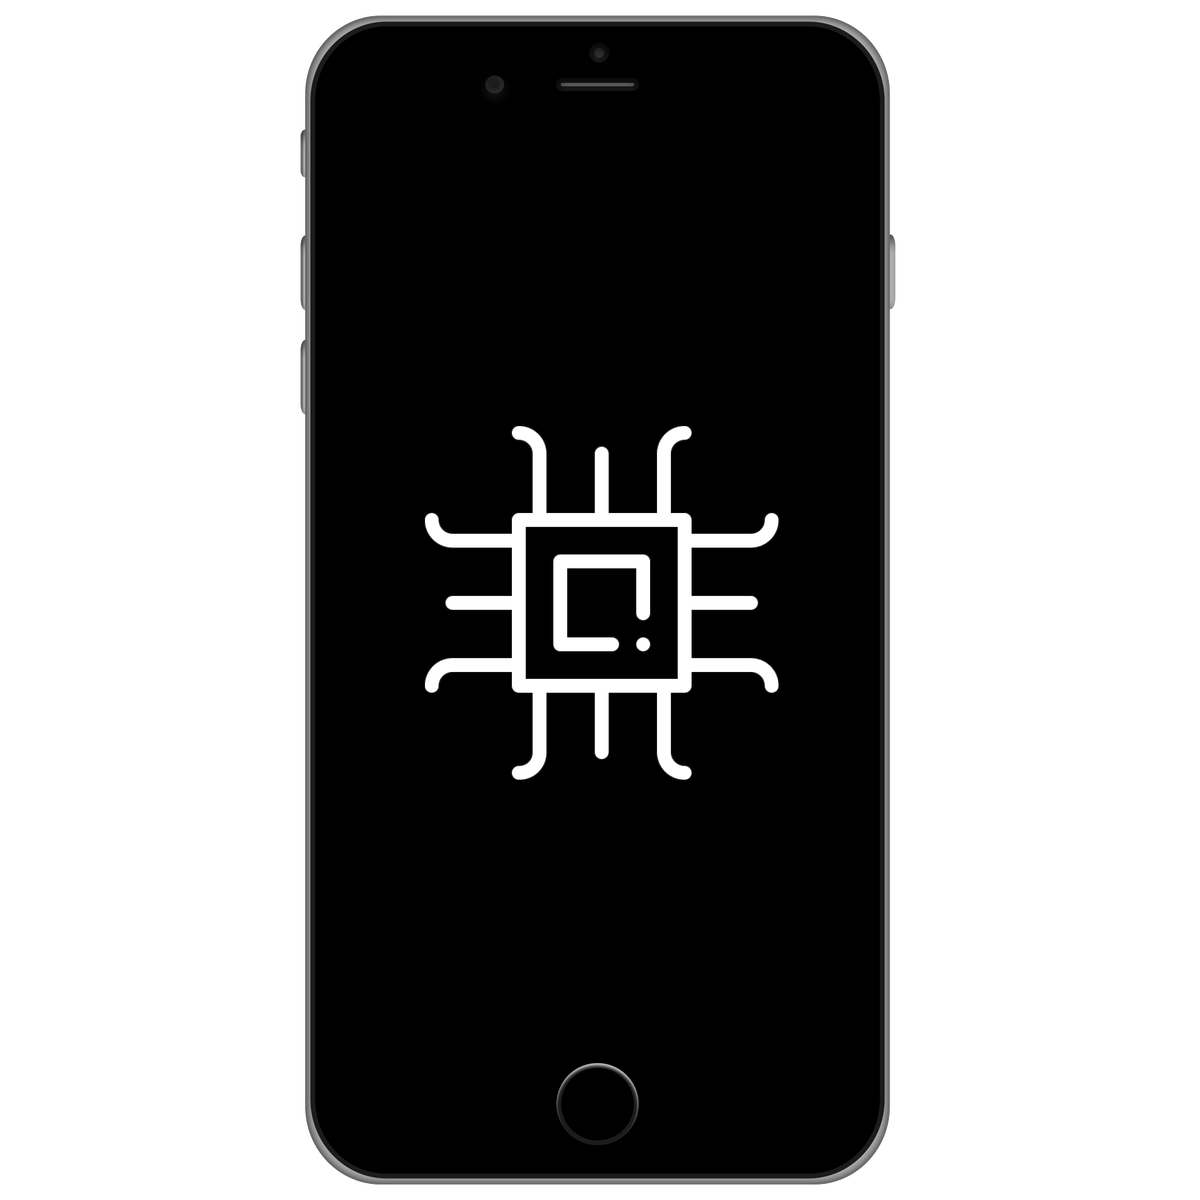 iPhone 11 Pro Motherboard Repair - TechPros